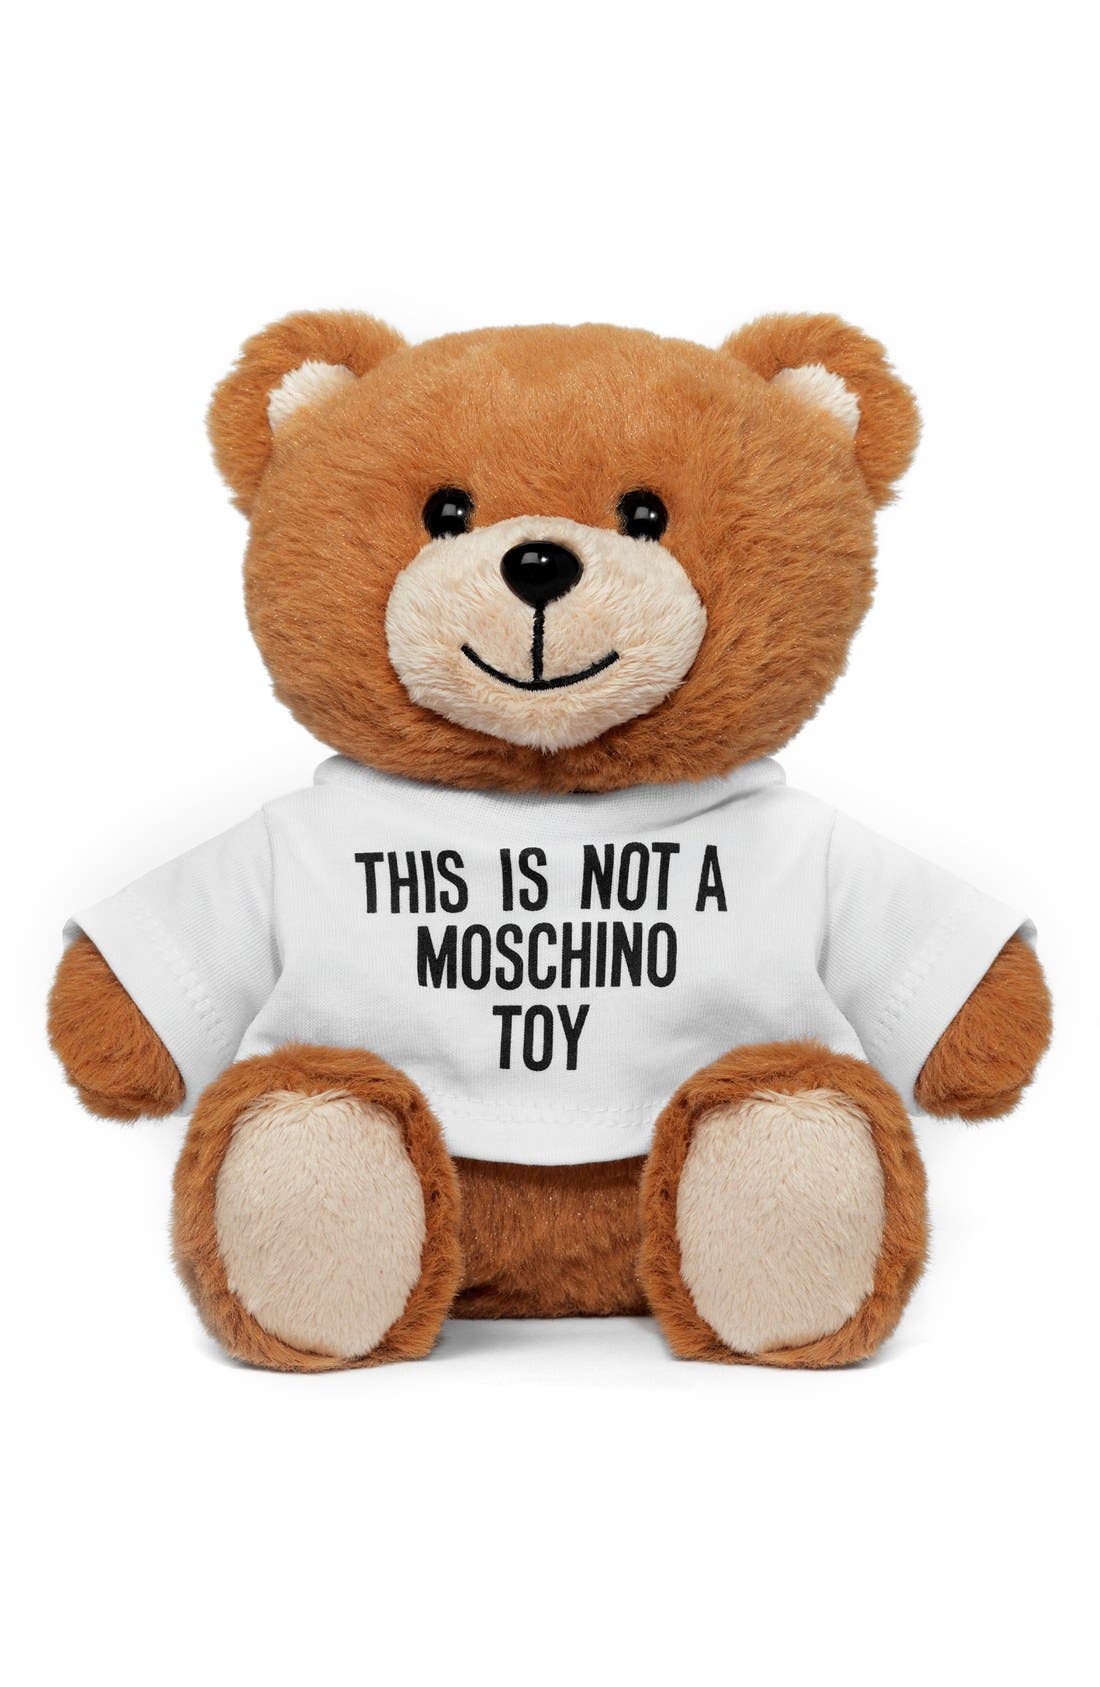 moschino bear toy